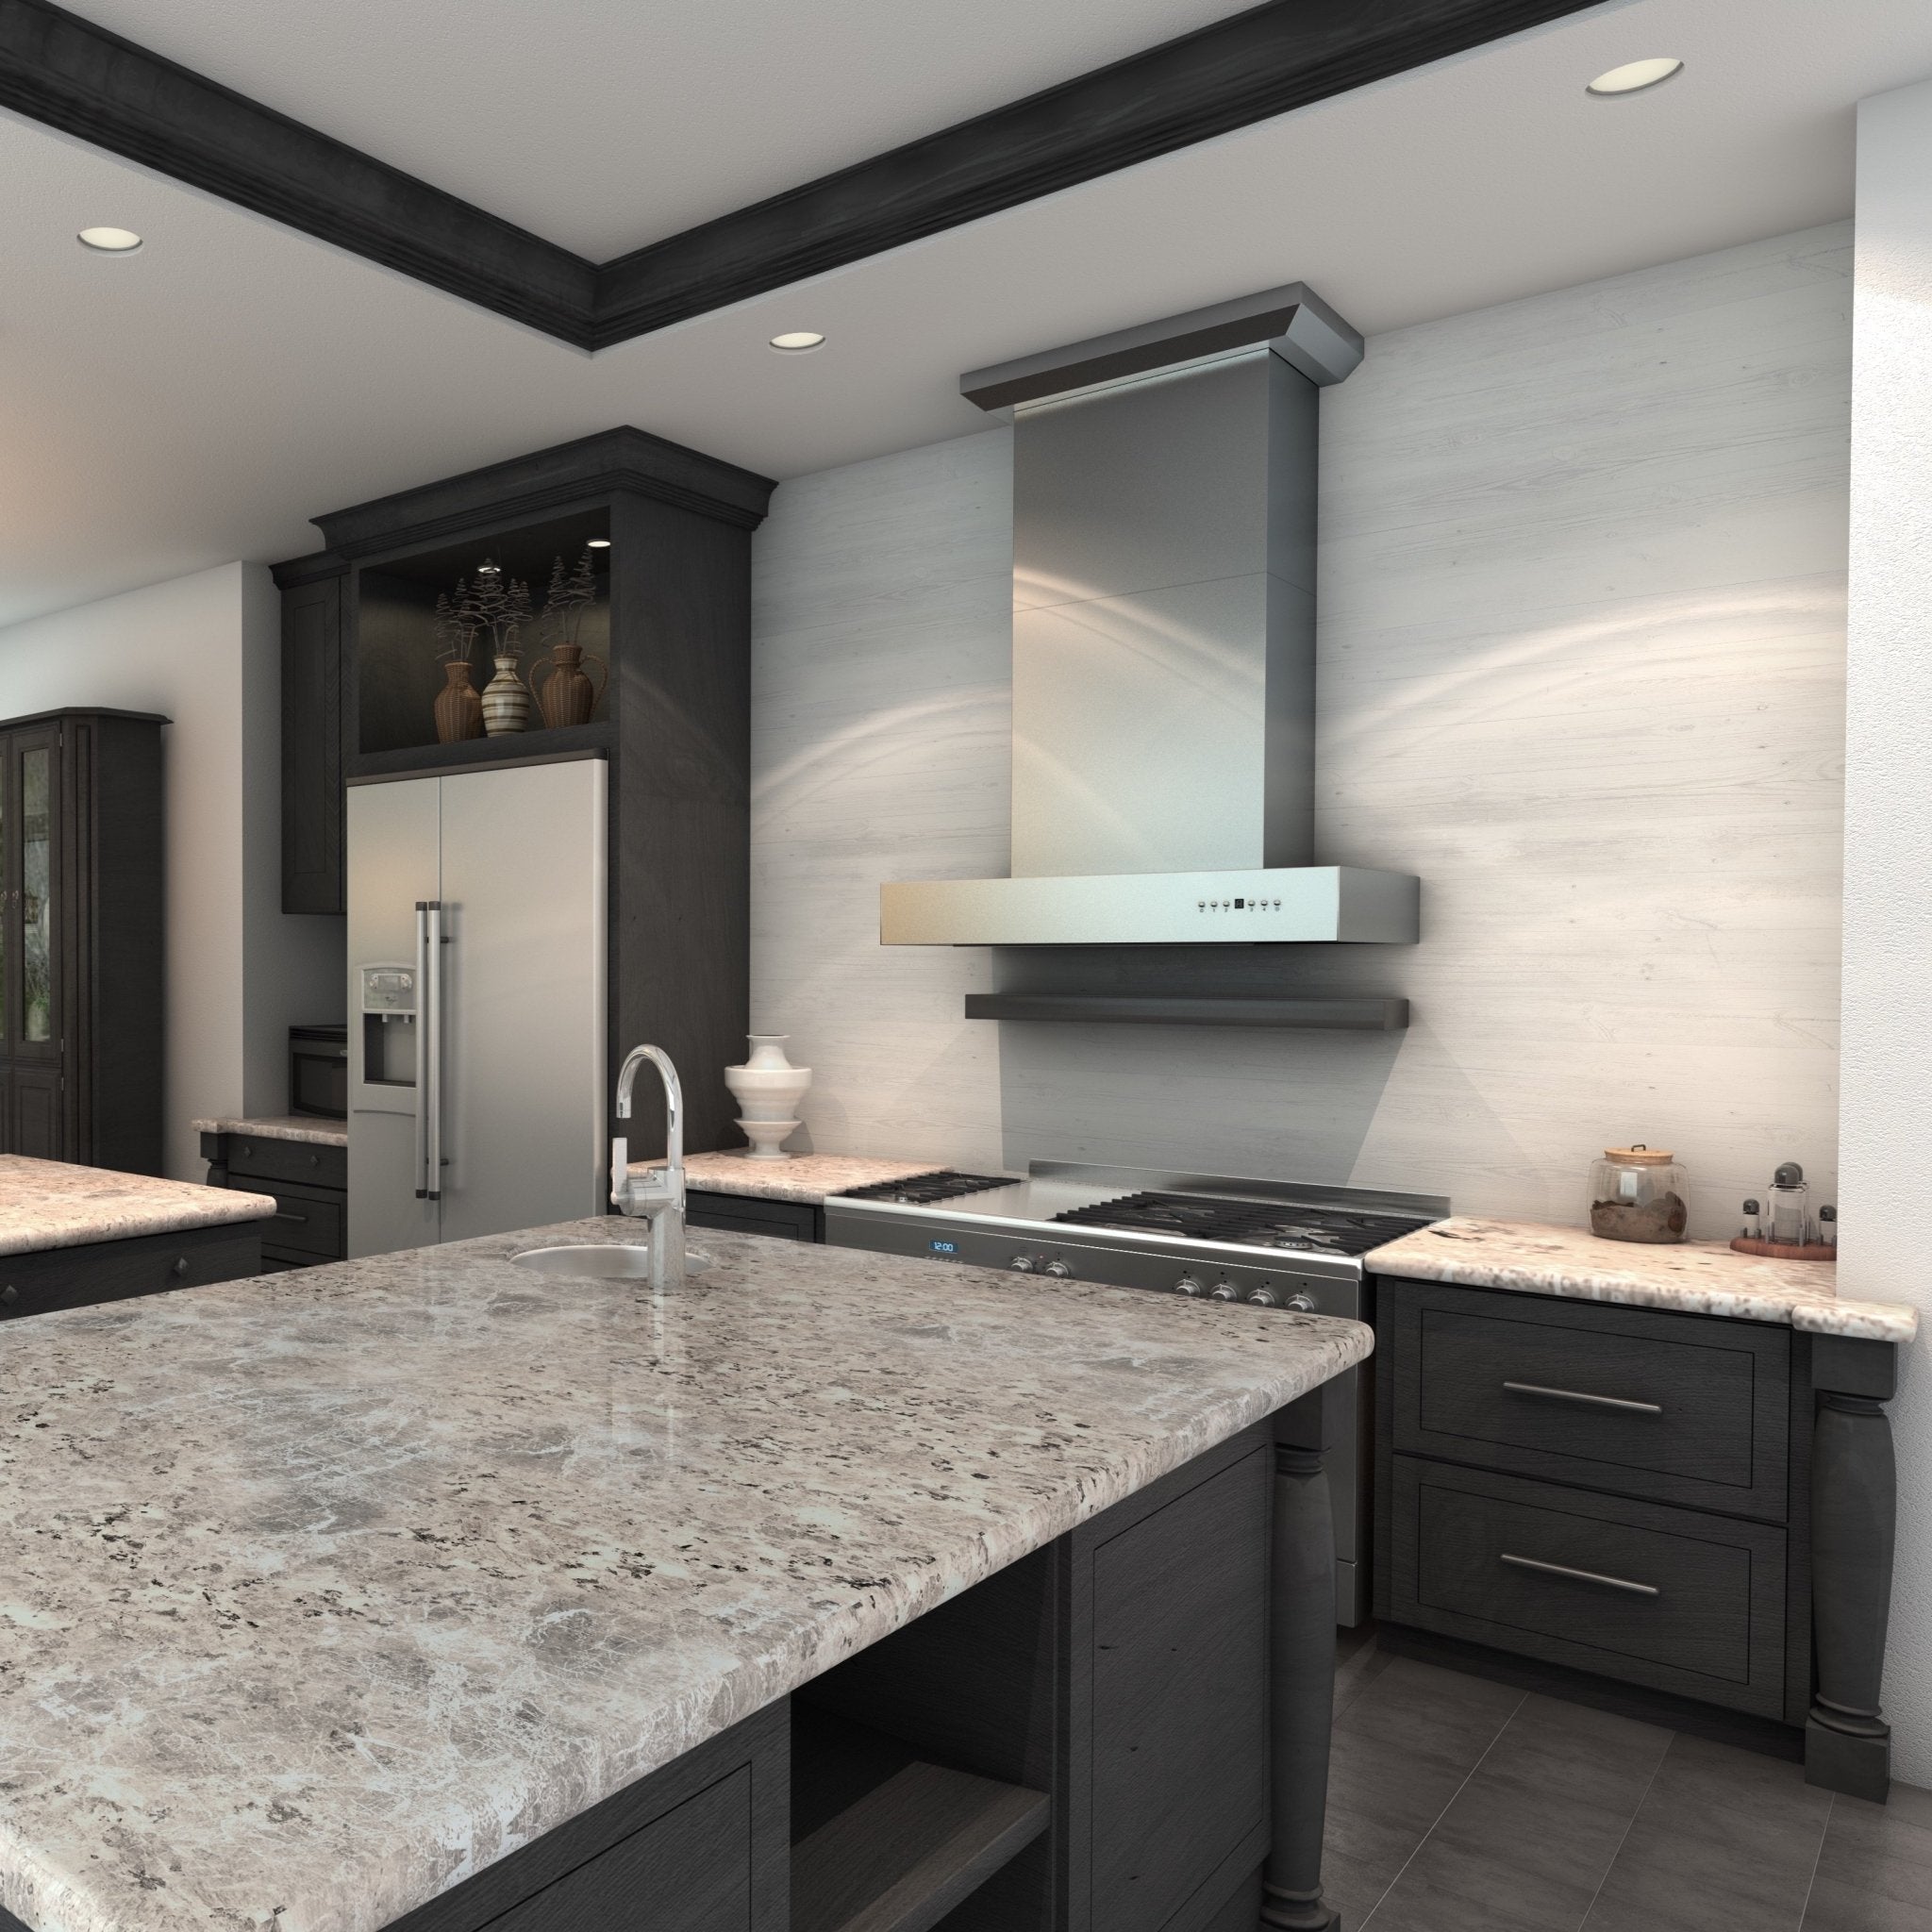 ZLINE Convertible Professional Wall Mount Range Hood in Stainless Steel (KECOM) in a modern kitchen.